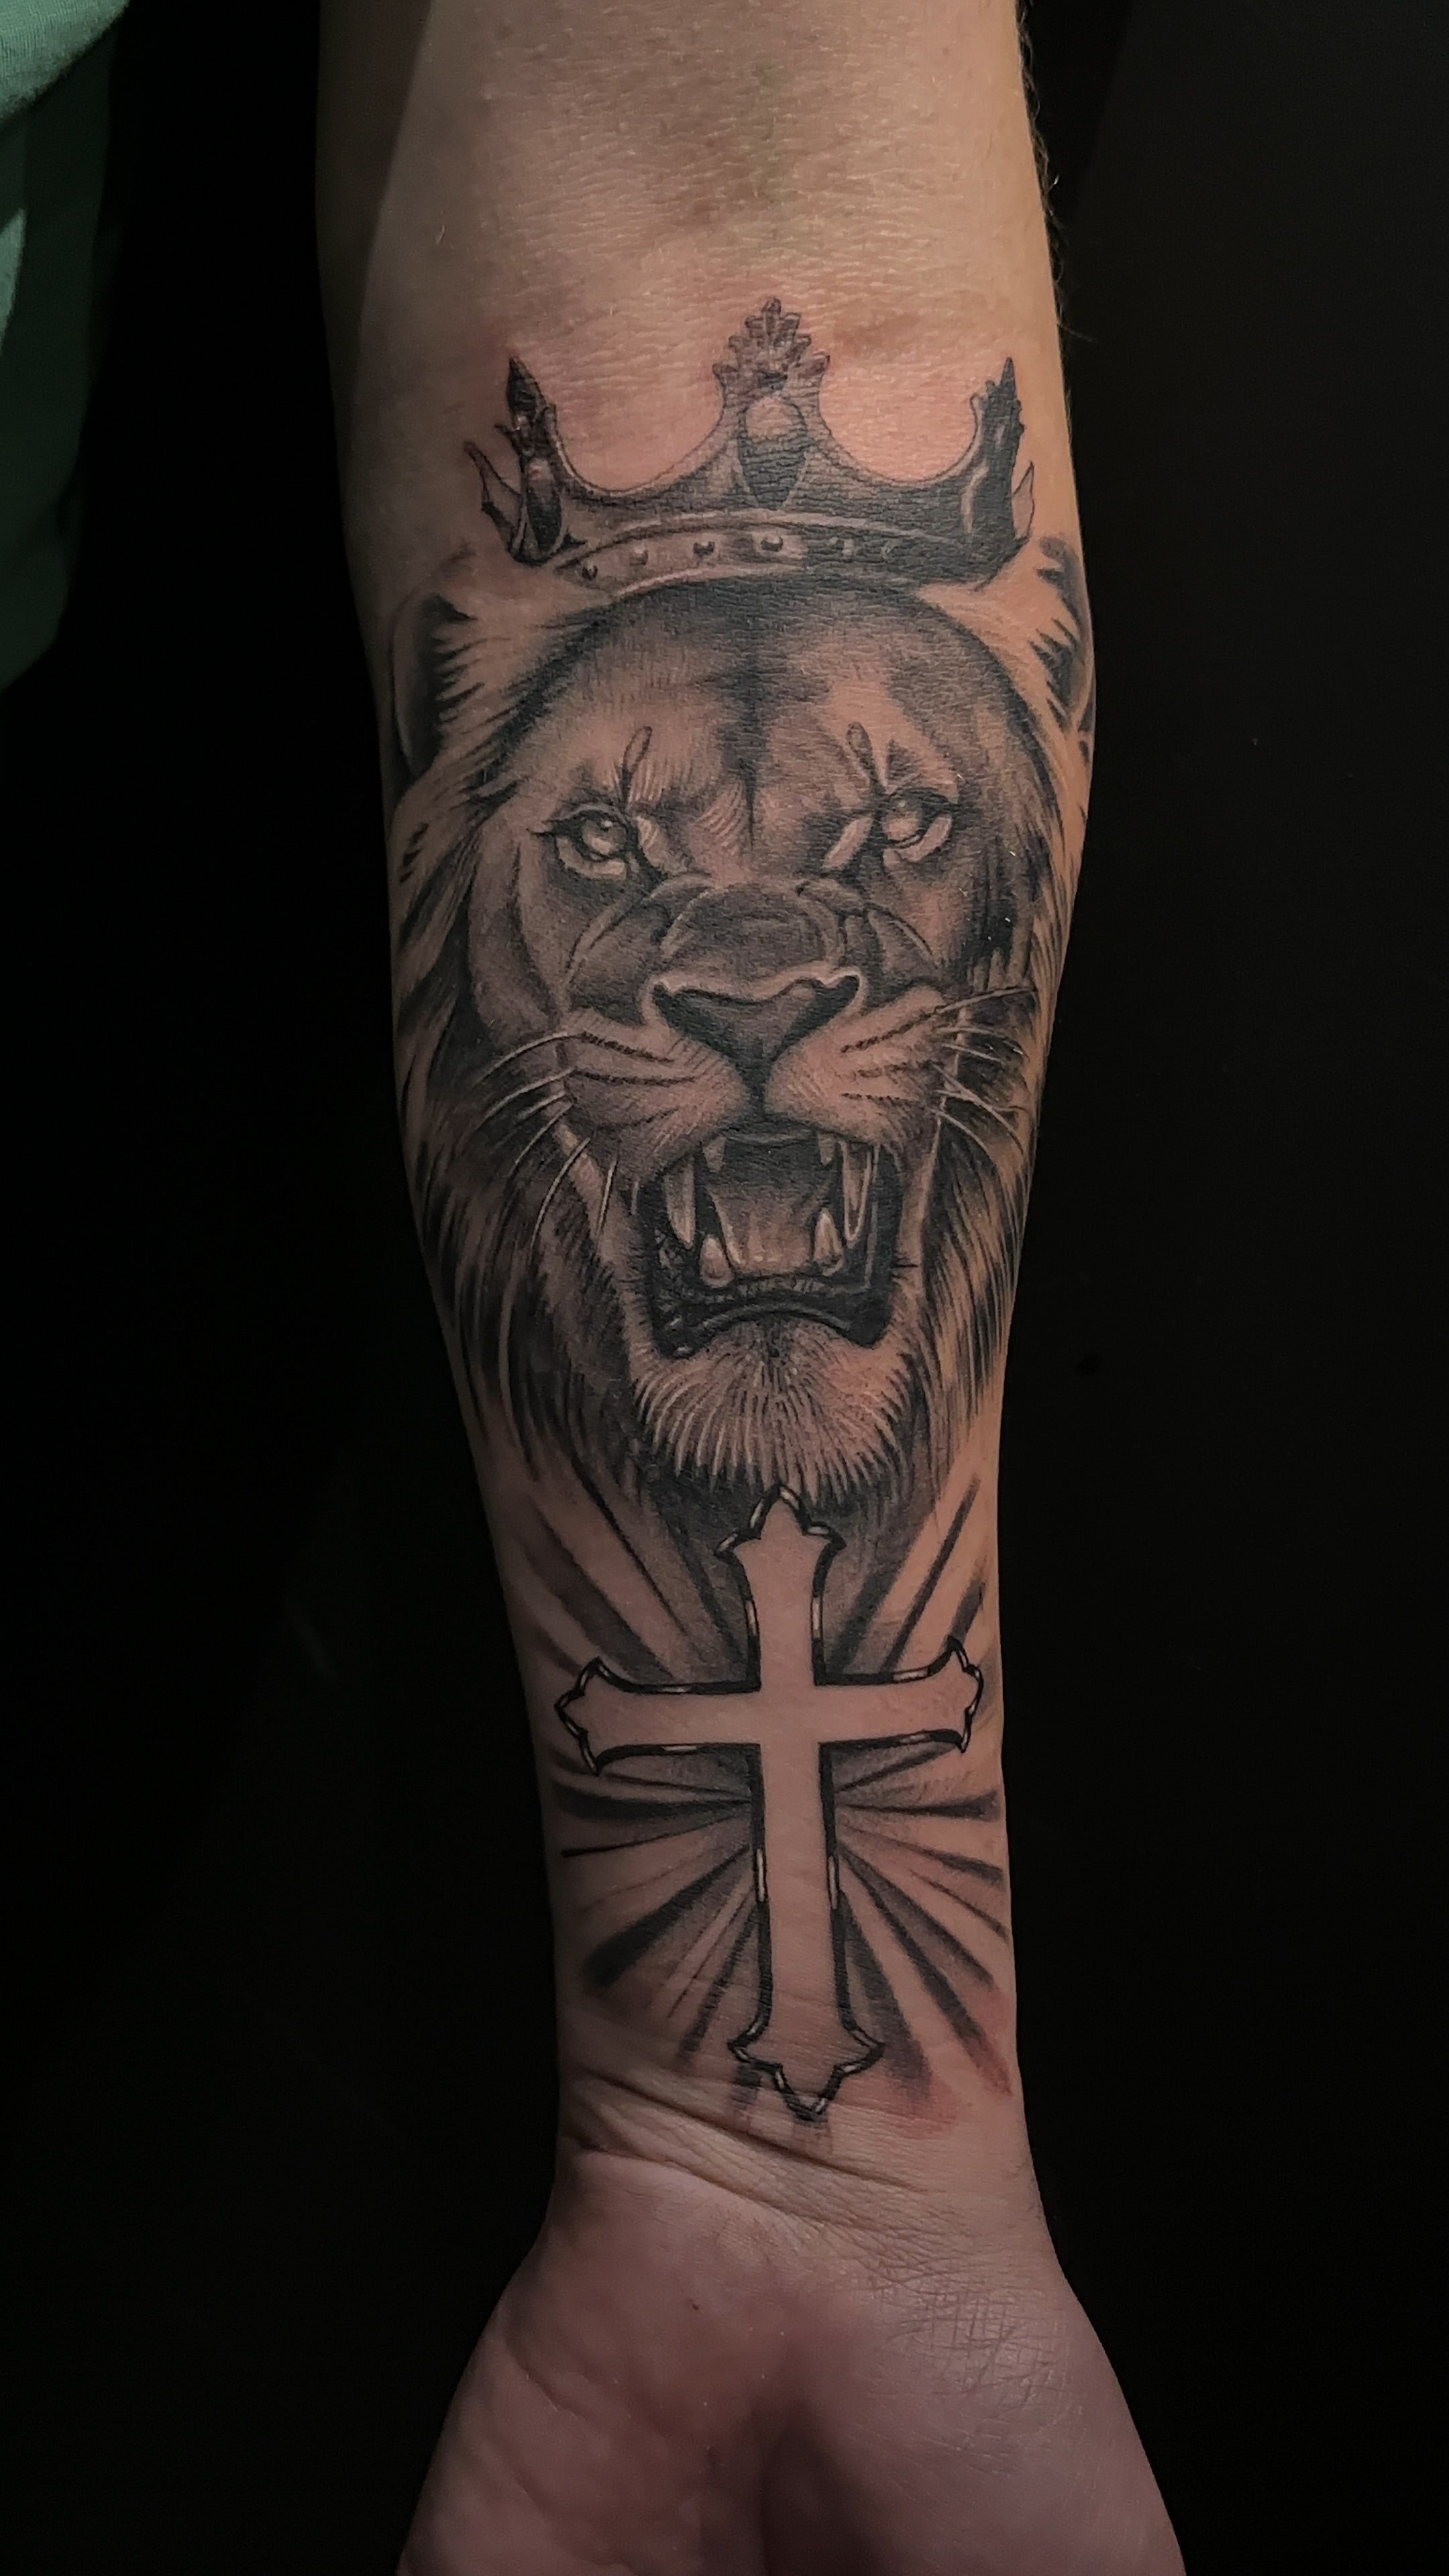 Are lion tattoos basic? - Quora